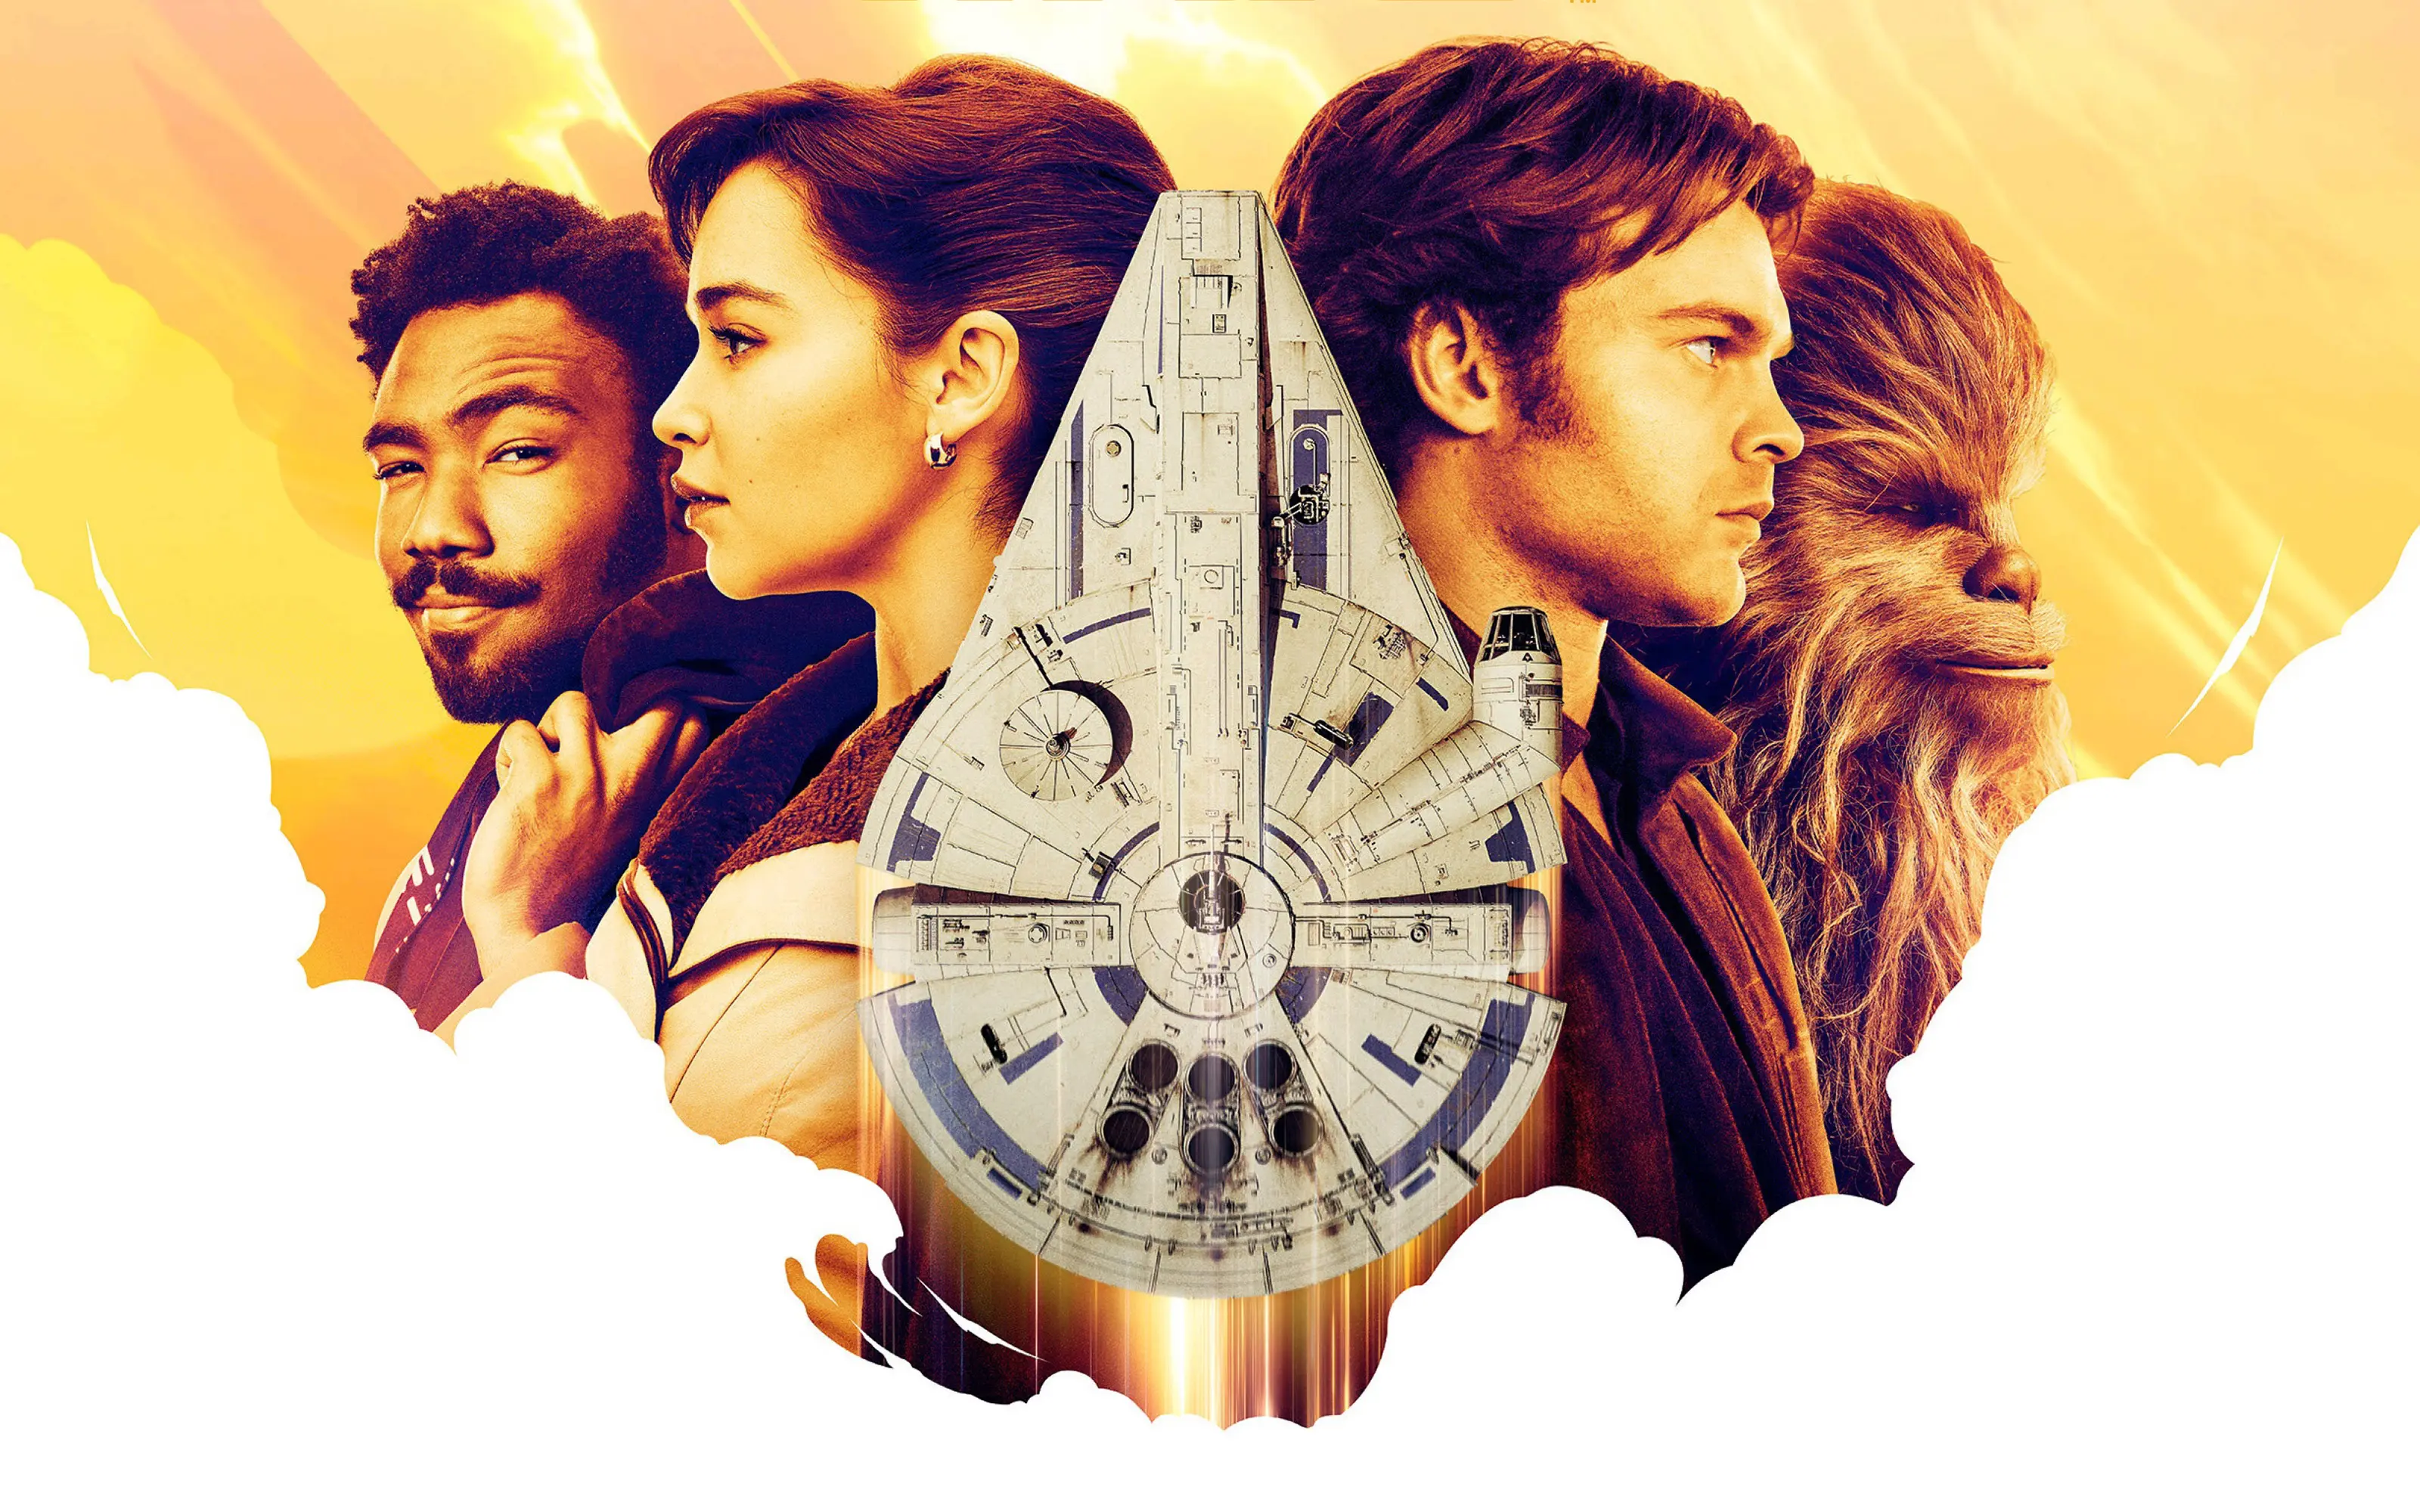 Solo : A Star Wars Story © Disney © Lucasfilm